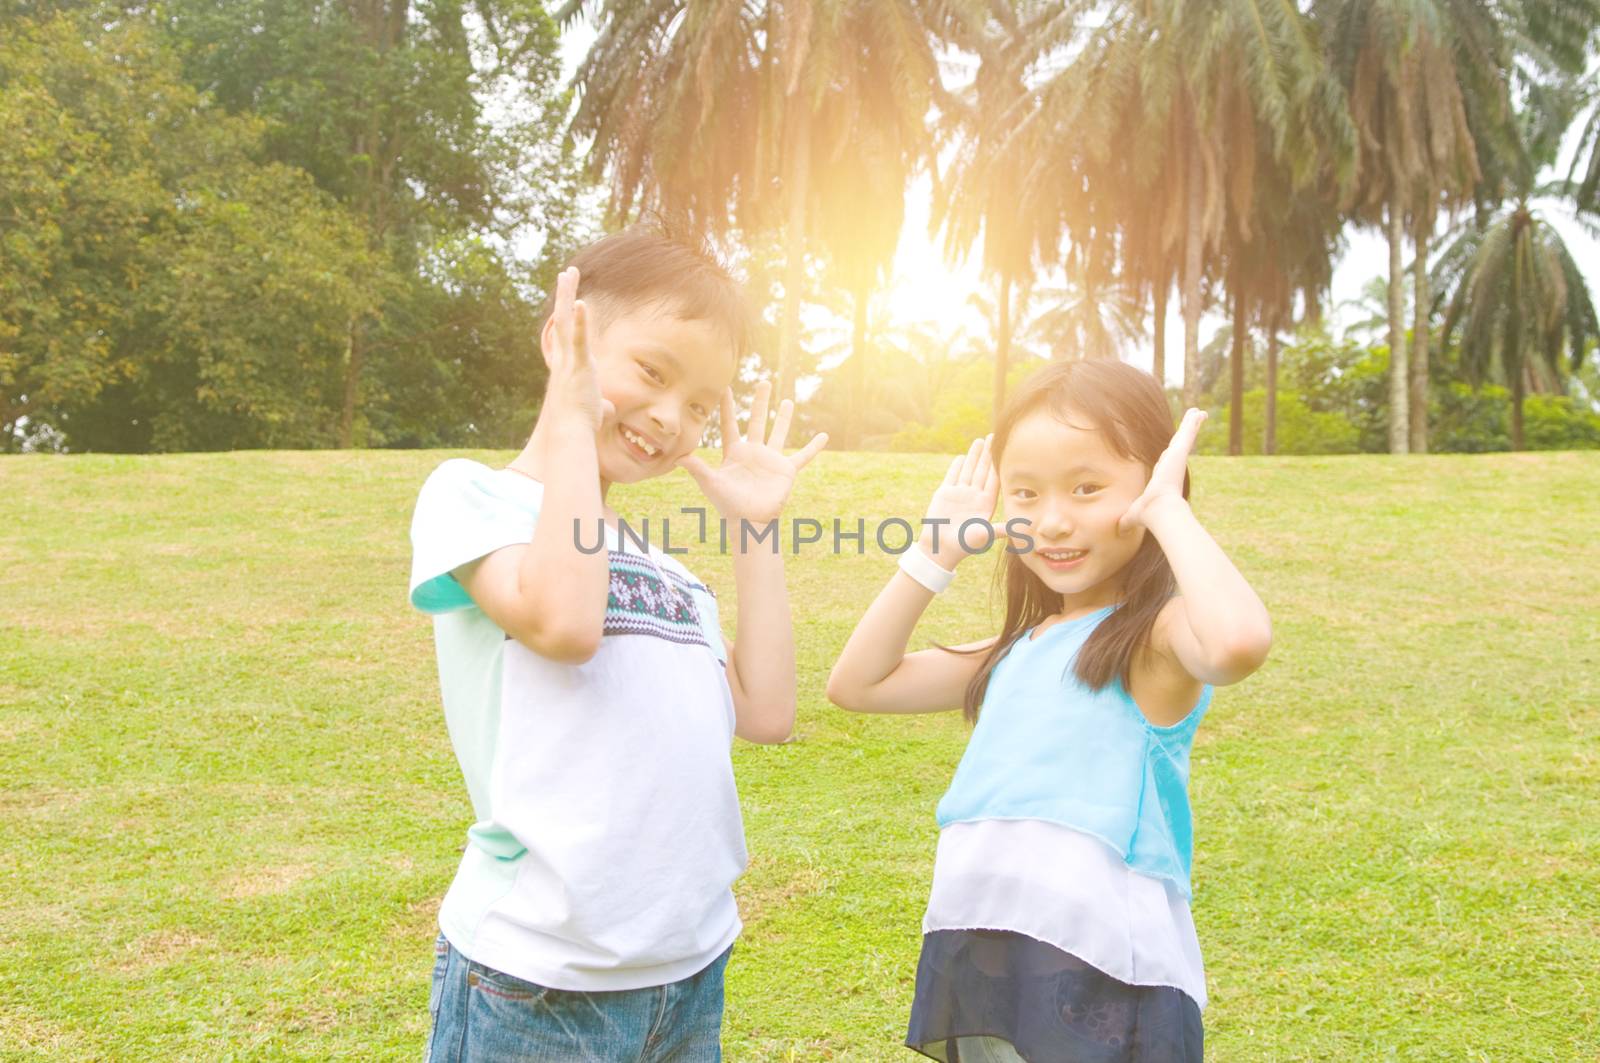 Asian children by yongtick